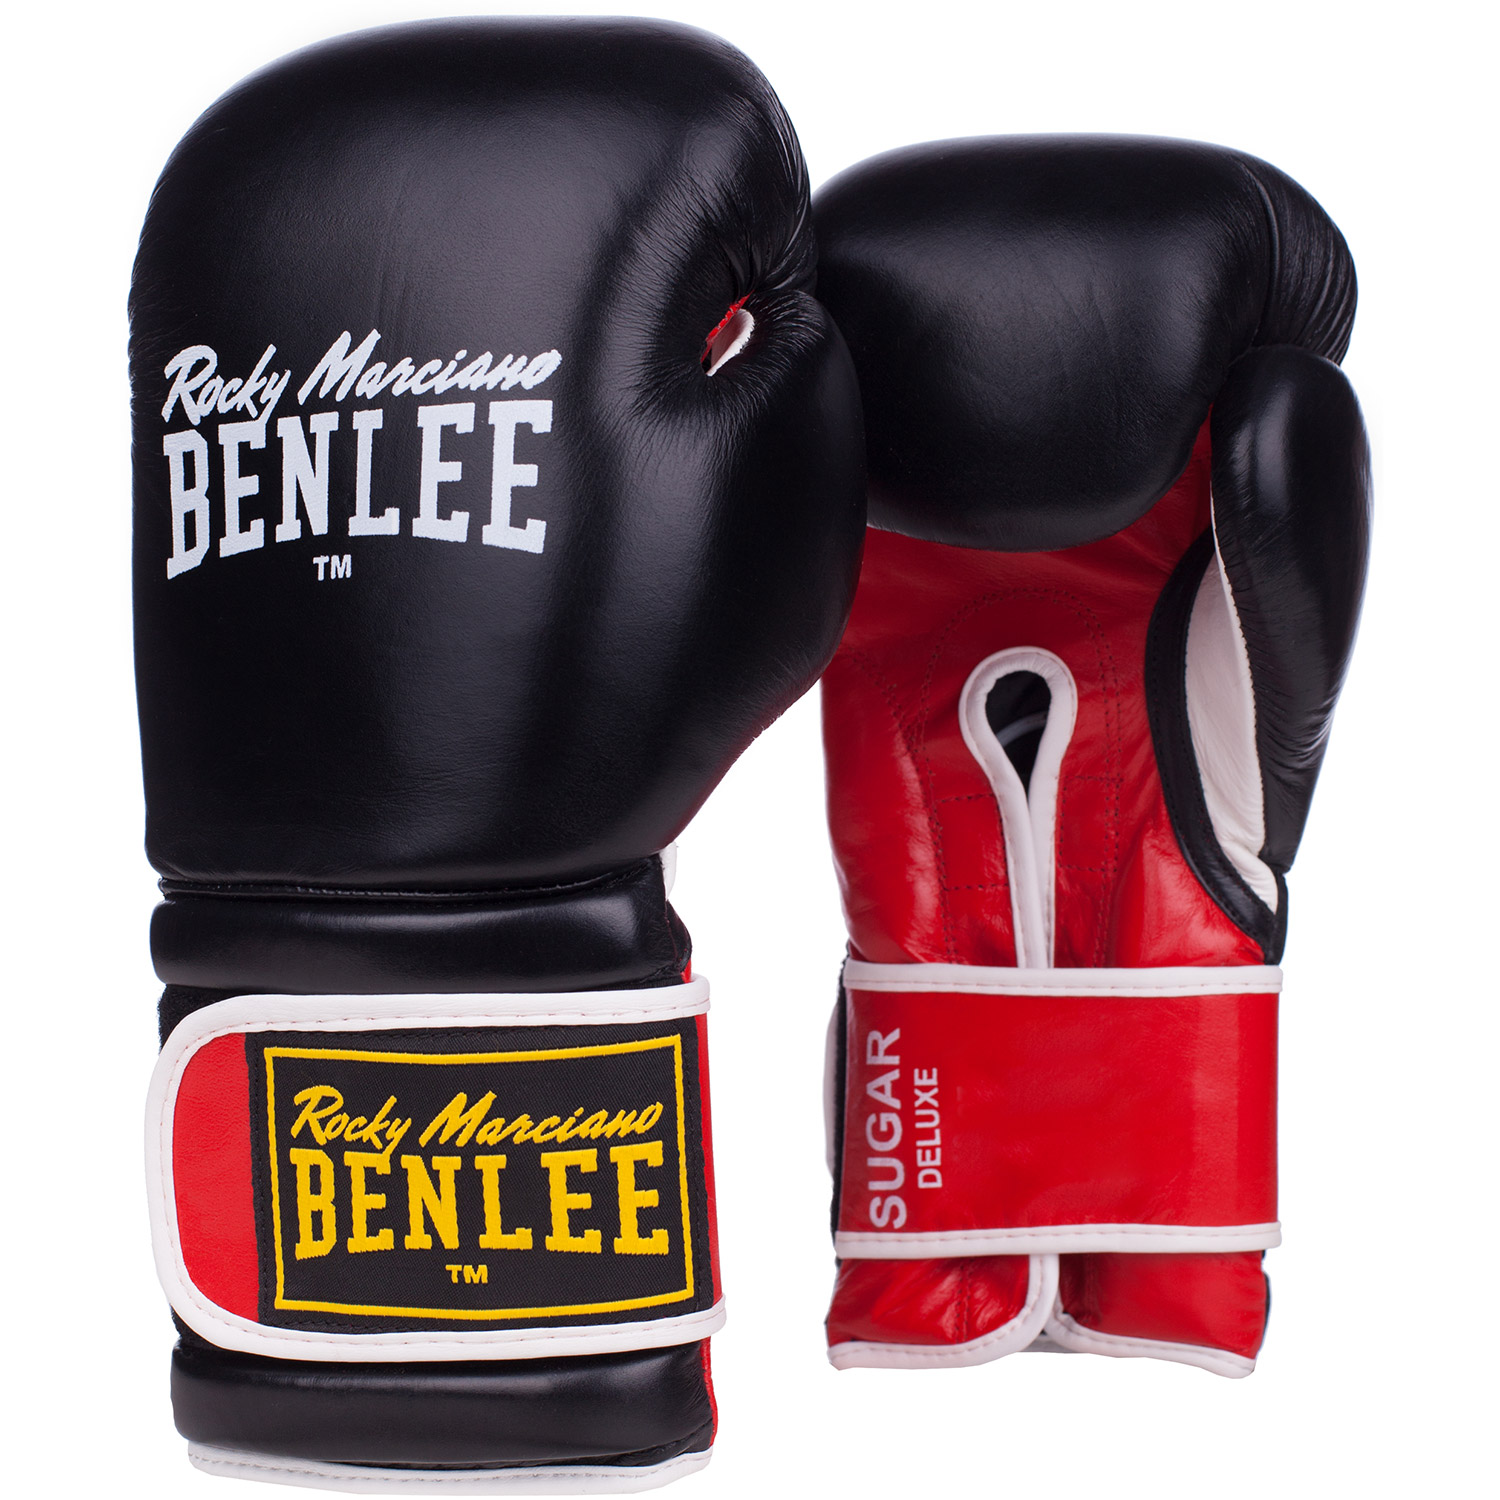 Benlee Sugar Deluxe boxing gloves 10 oz